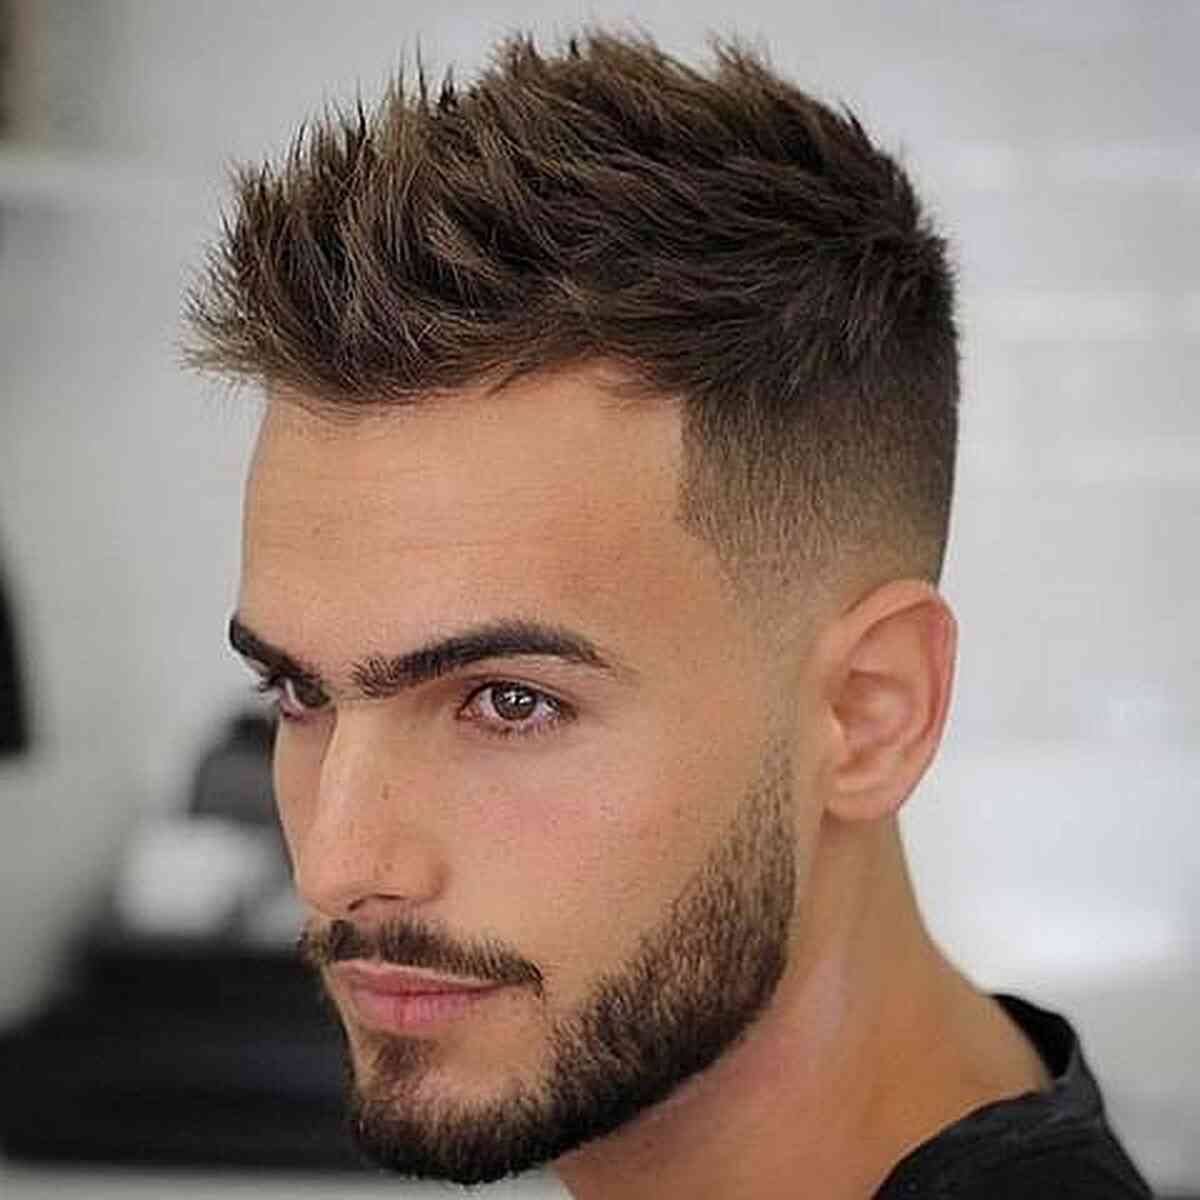 100% Real Hair！Men Casual Light Brown Human Hair Wig Fashion Toupee | eBay